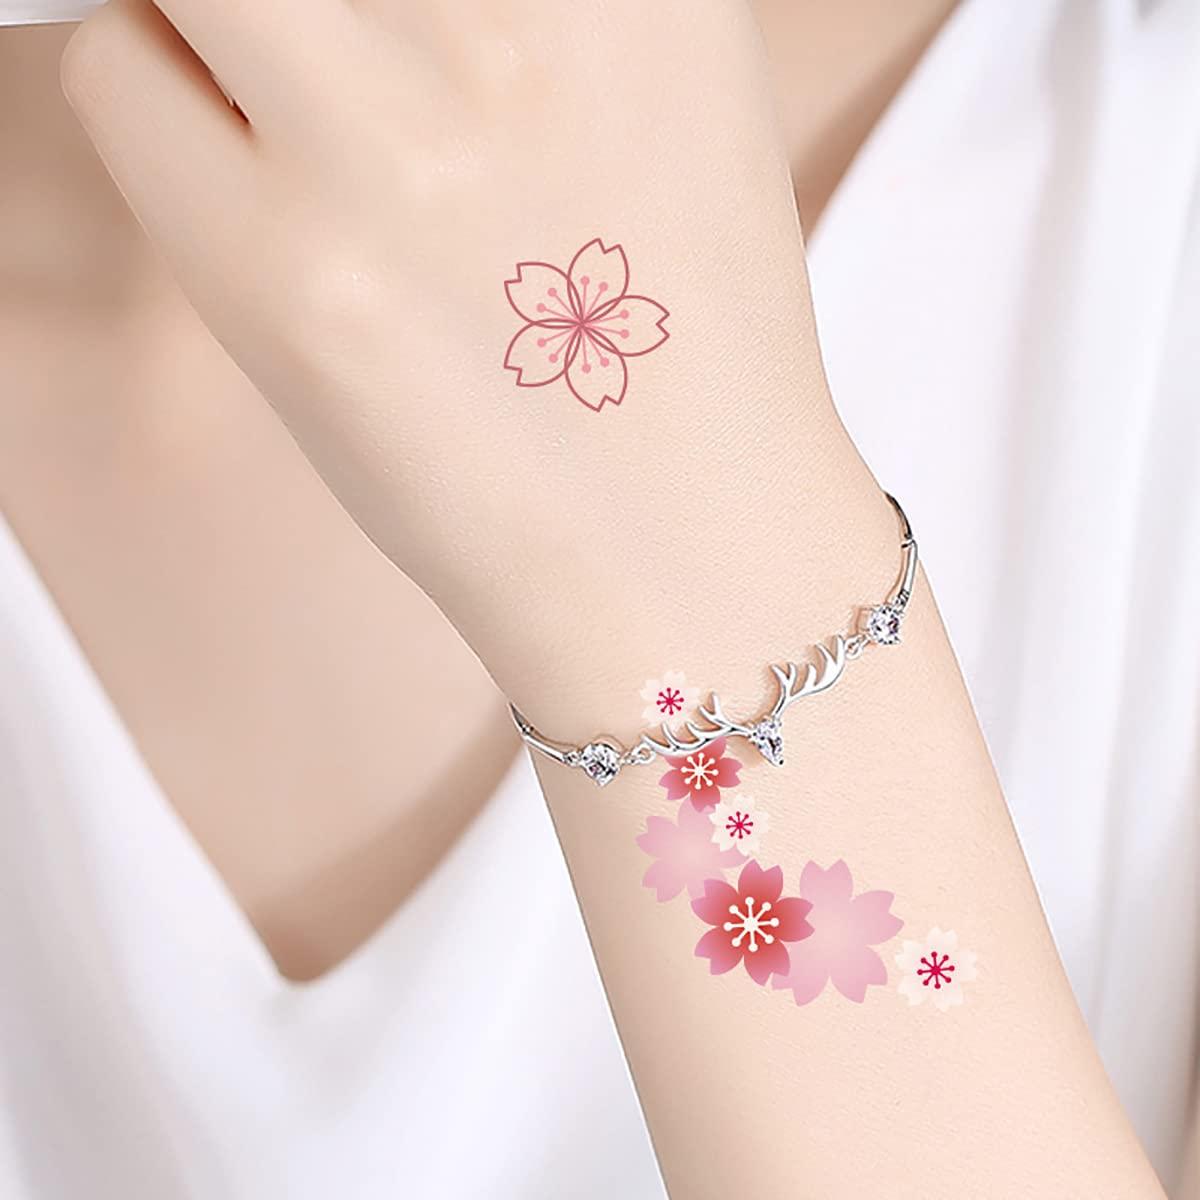 Realistic Fake Flower Tattoos - Rose Orchid Fake Tattoo Sticker Decoration  1pc S | eBay